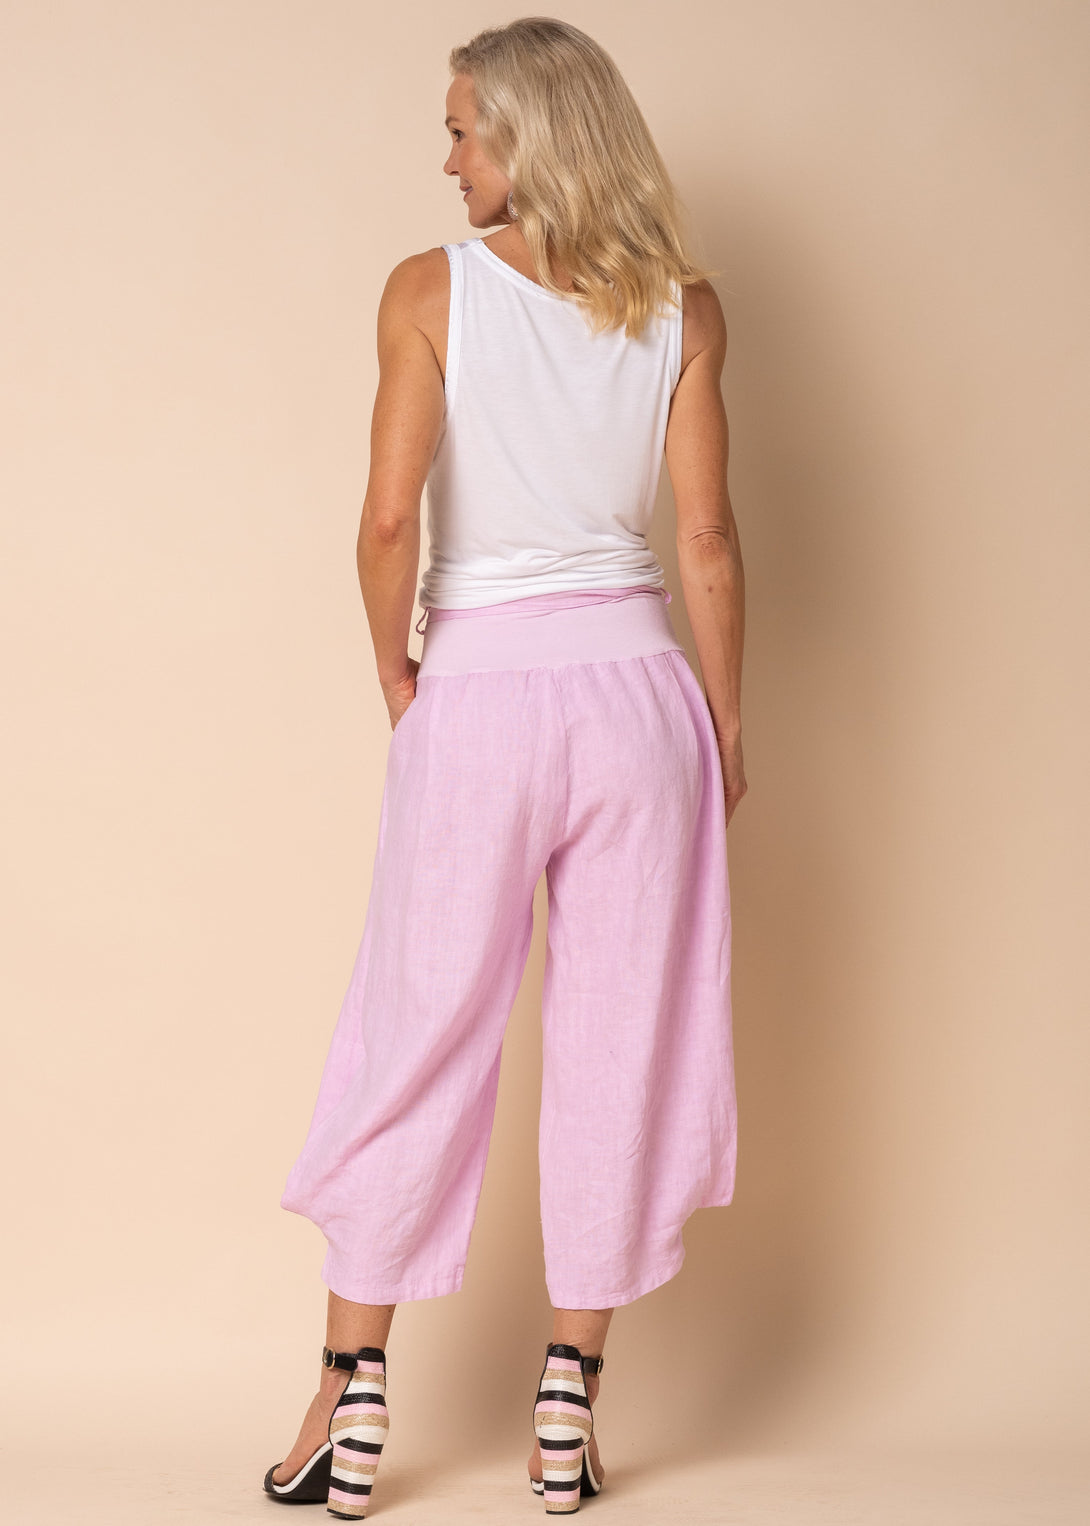 Addison Linen Pants in Petal Pink